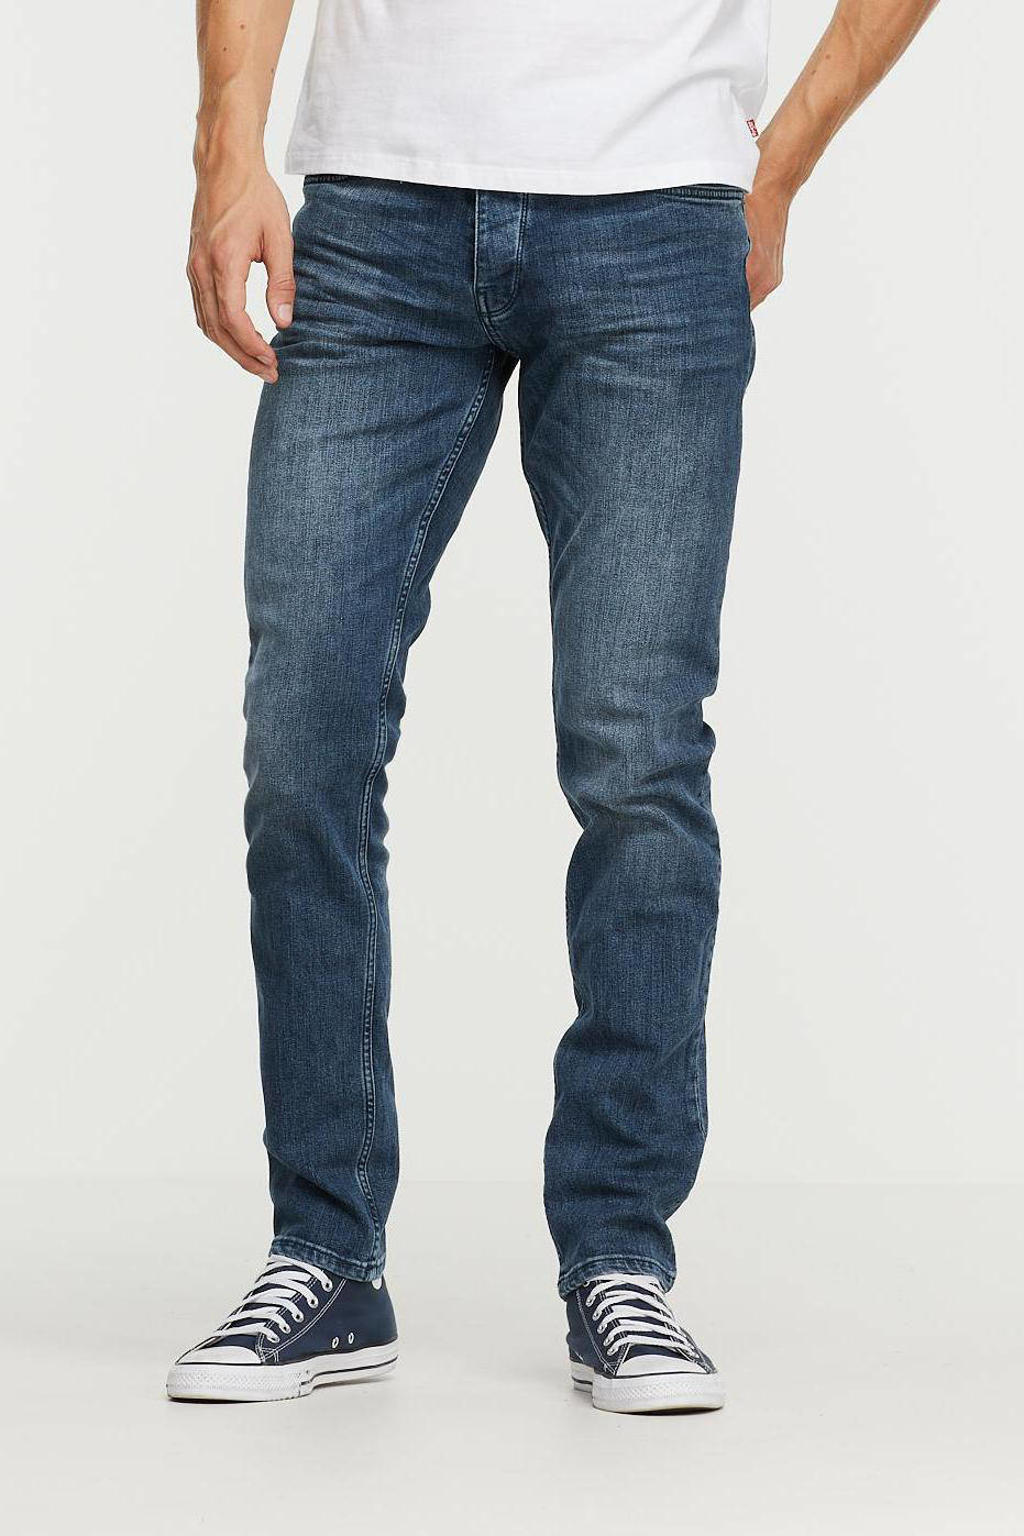 Purewhite slim fit jeans The Stan W0104 ESSENTIALS denim mid blue